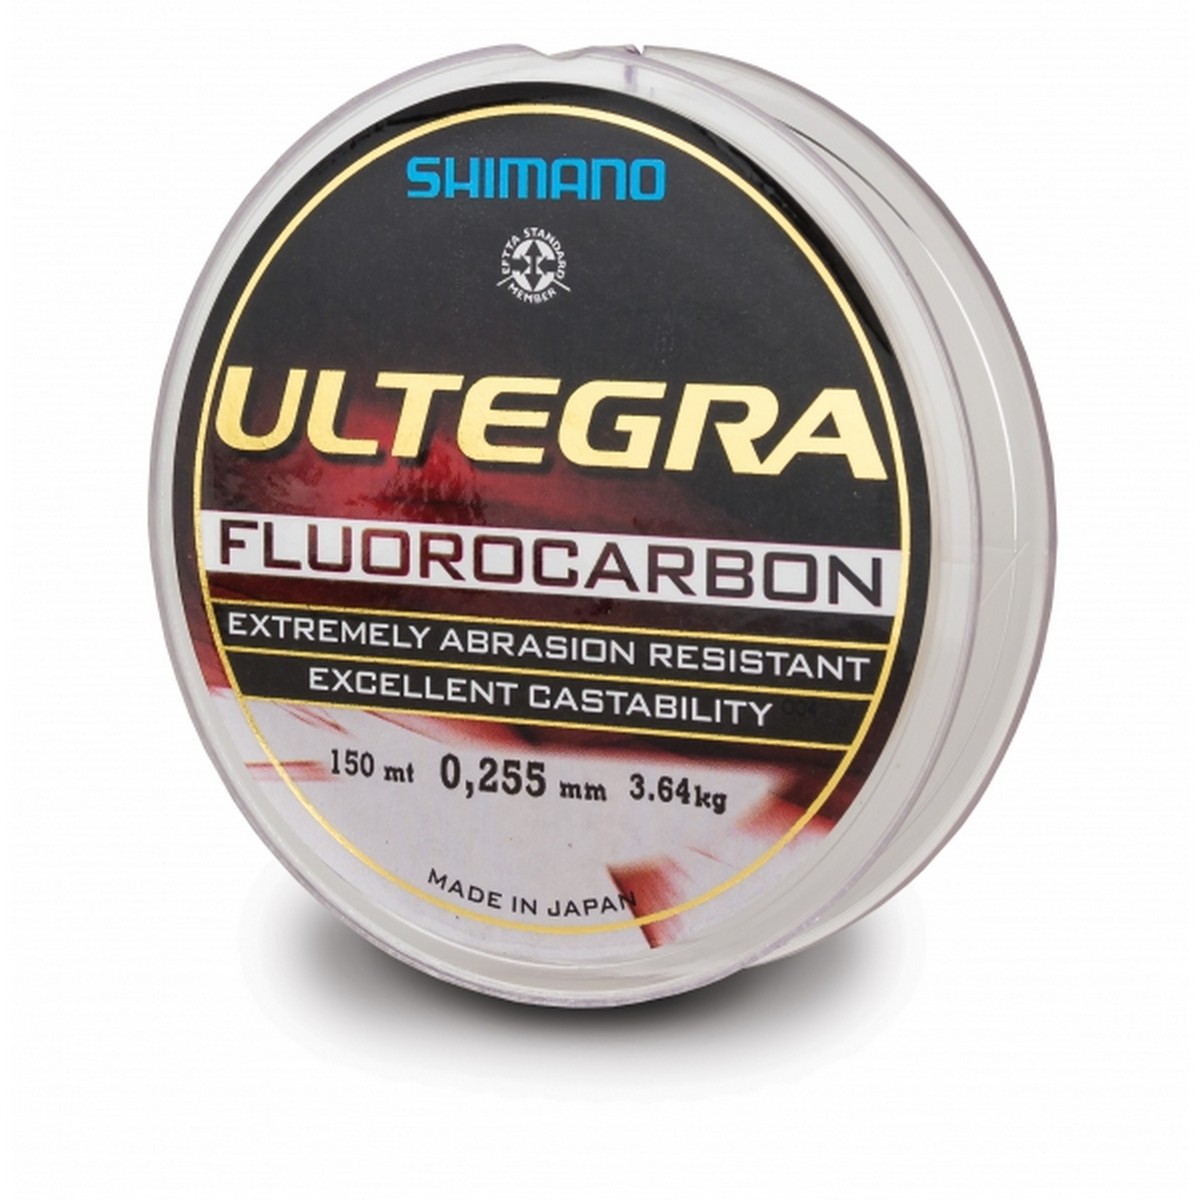 Shimano Ultegra Fluorocarbon Reel Line 150m-0